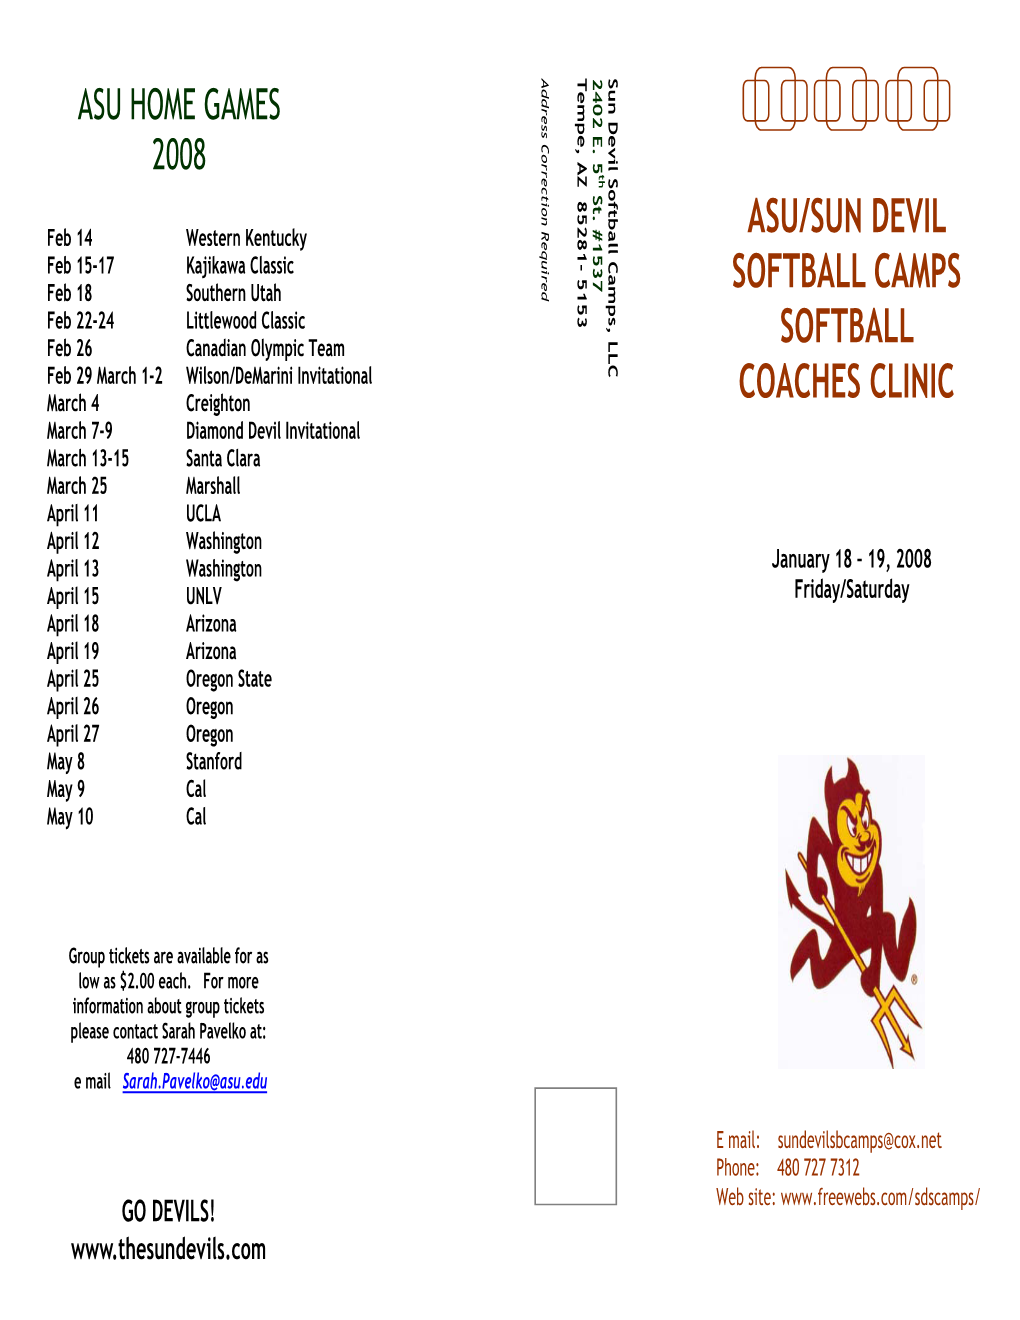 Asu/Sun Devil Softball Camps Softball Coaches Clinic